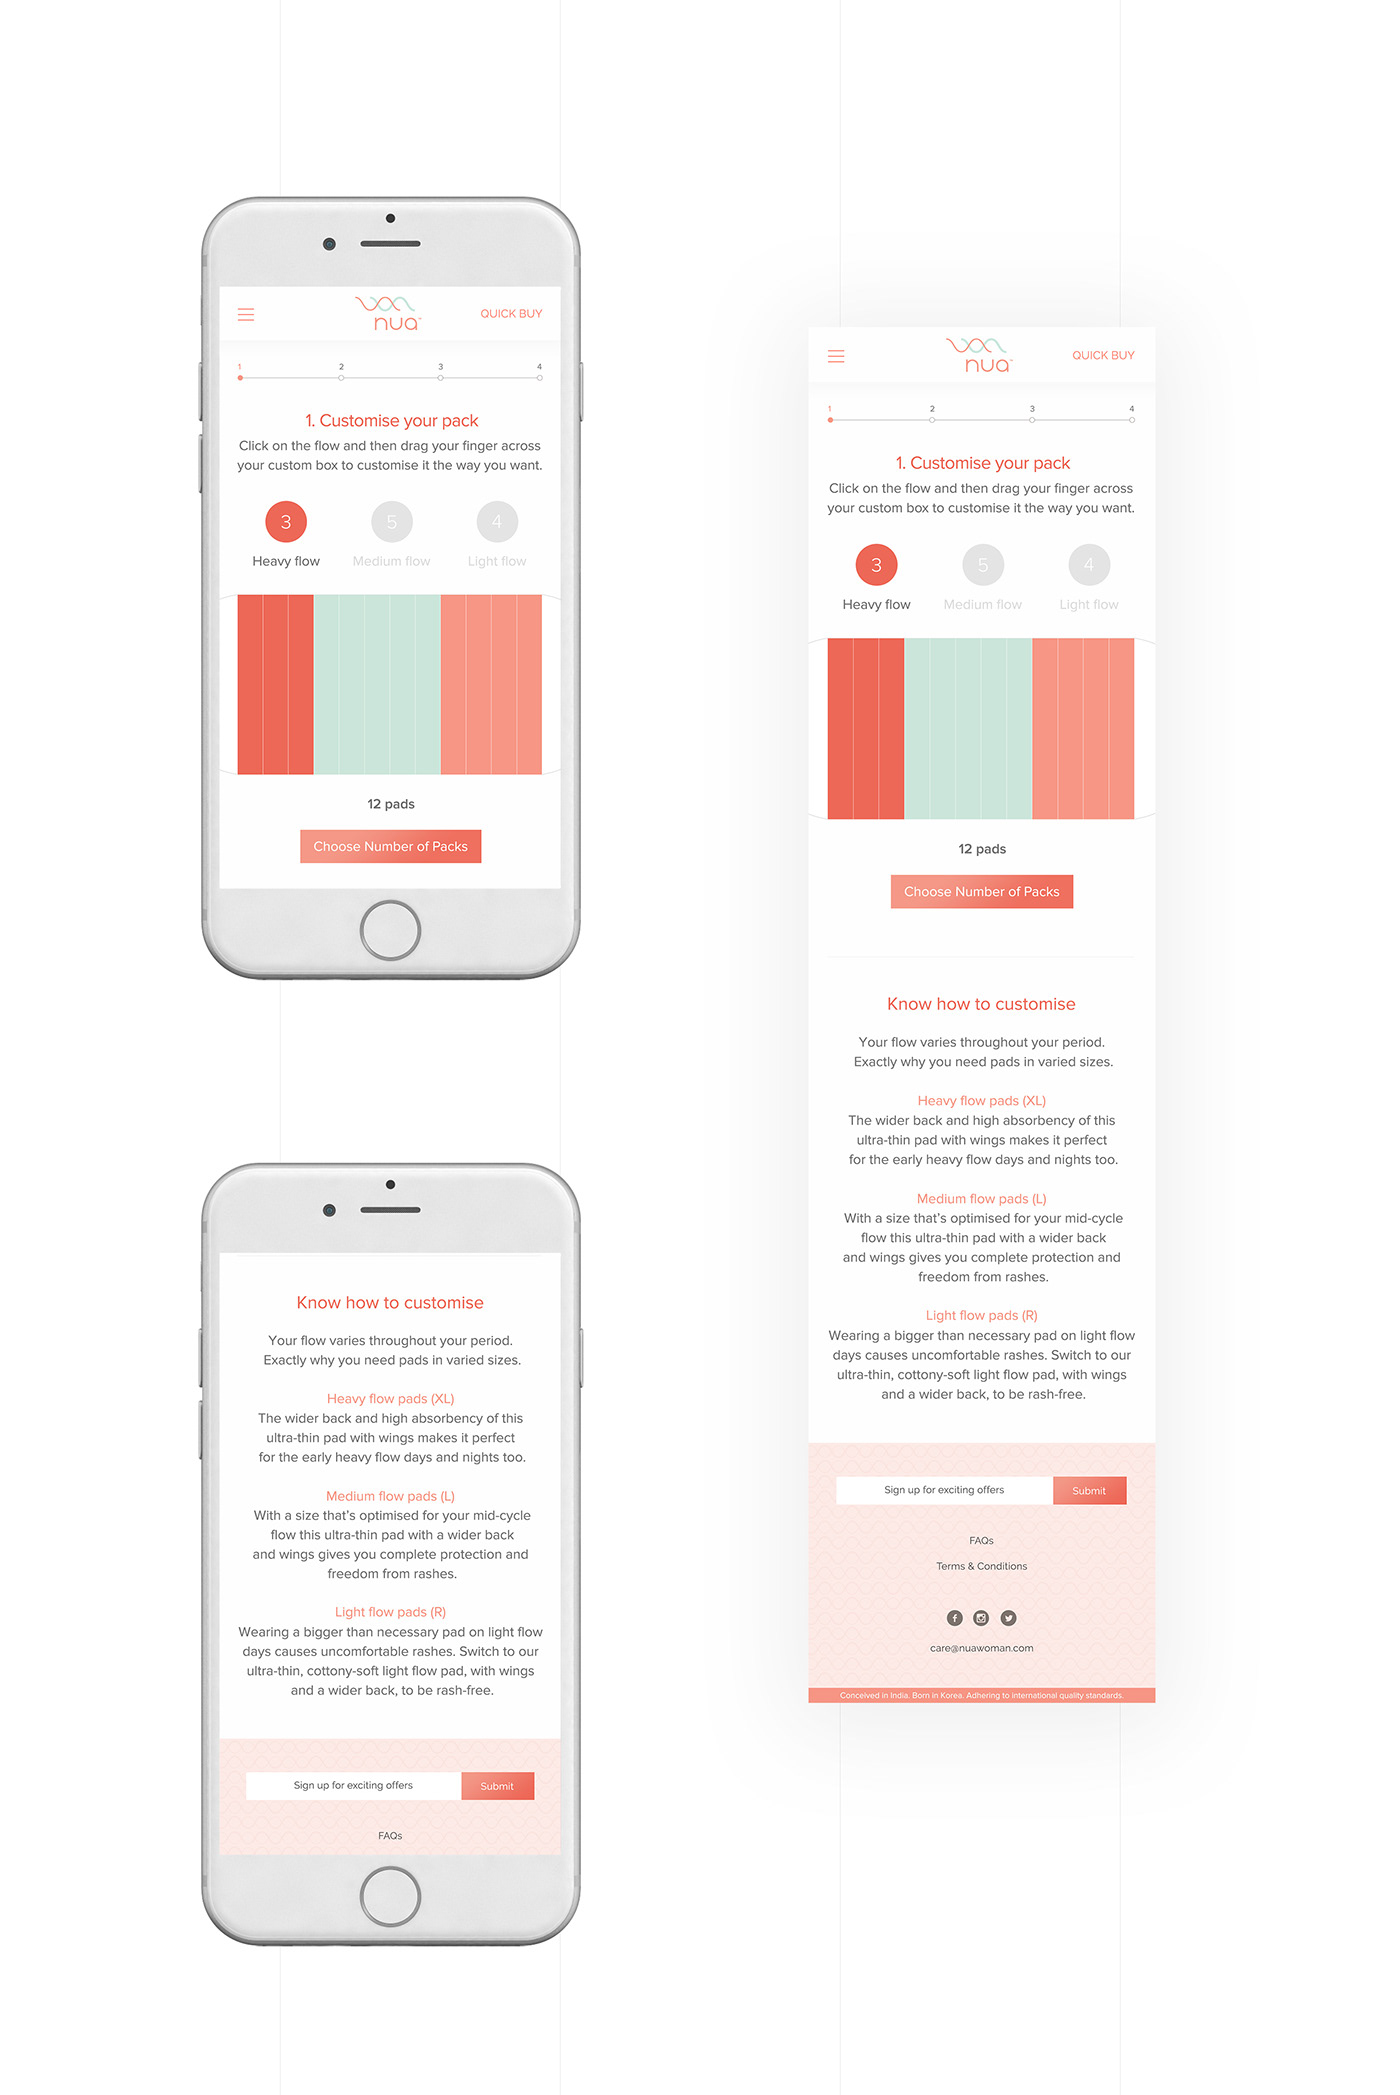 user experience user interface ux UI design women Wellness art direction  mobile Web Design 